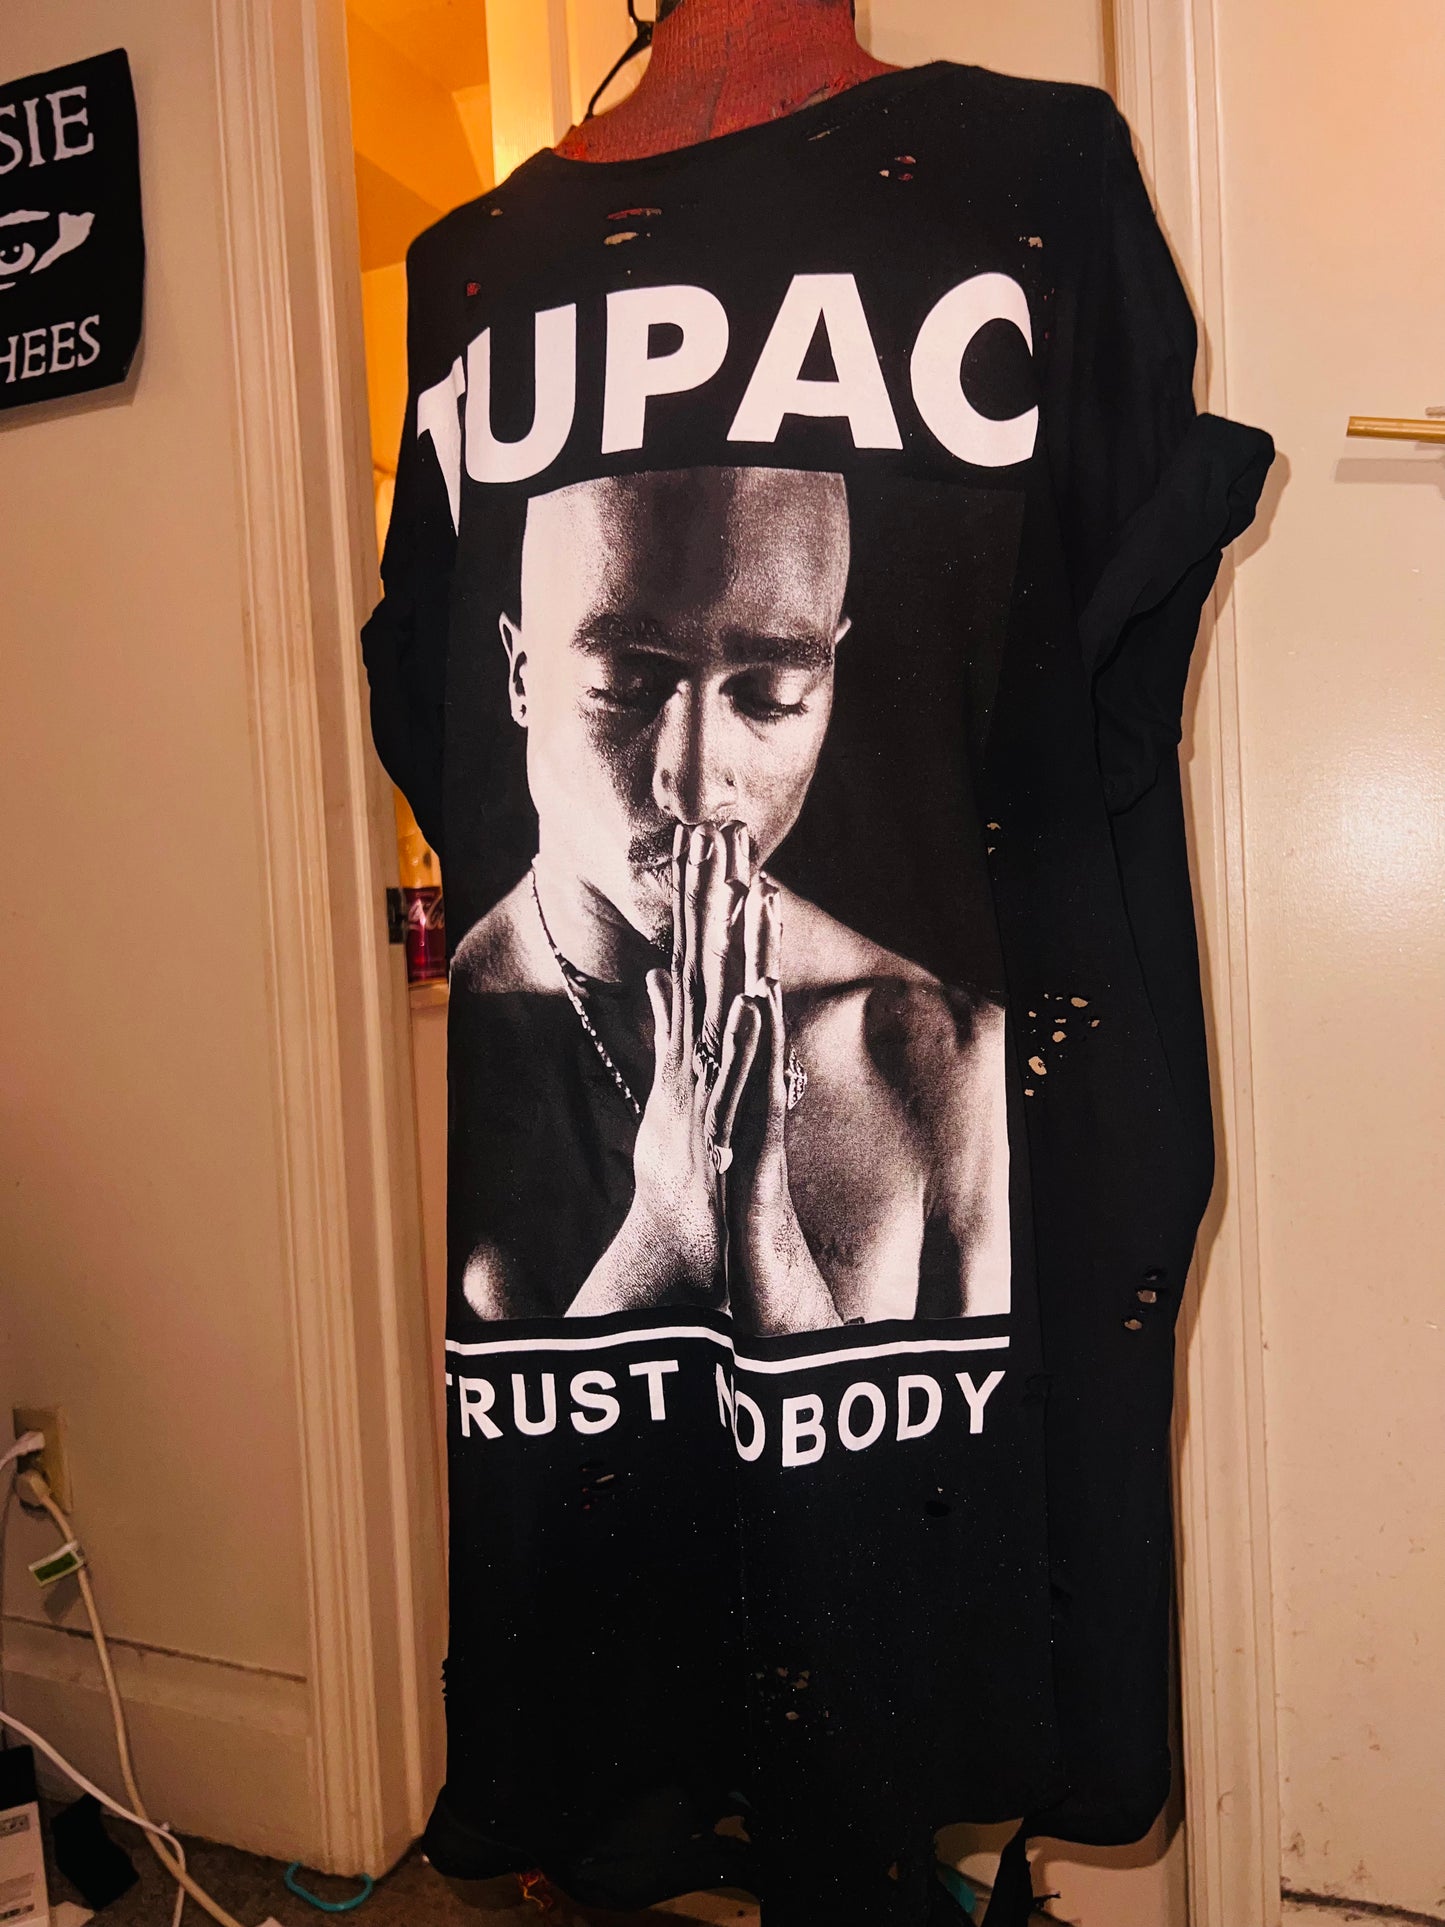 Tupac “Trust Nobody” Oversized Distressed Tee